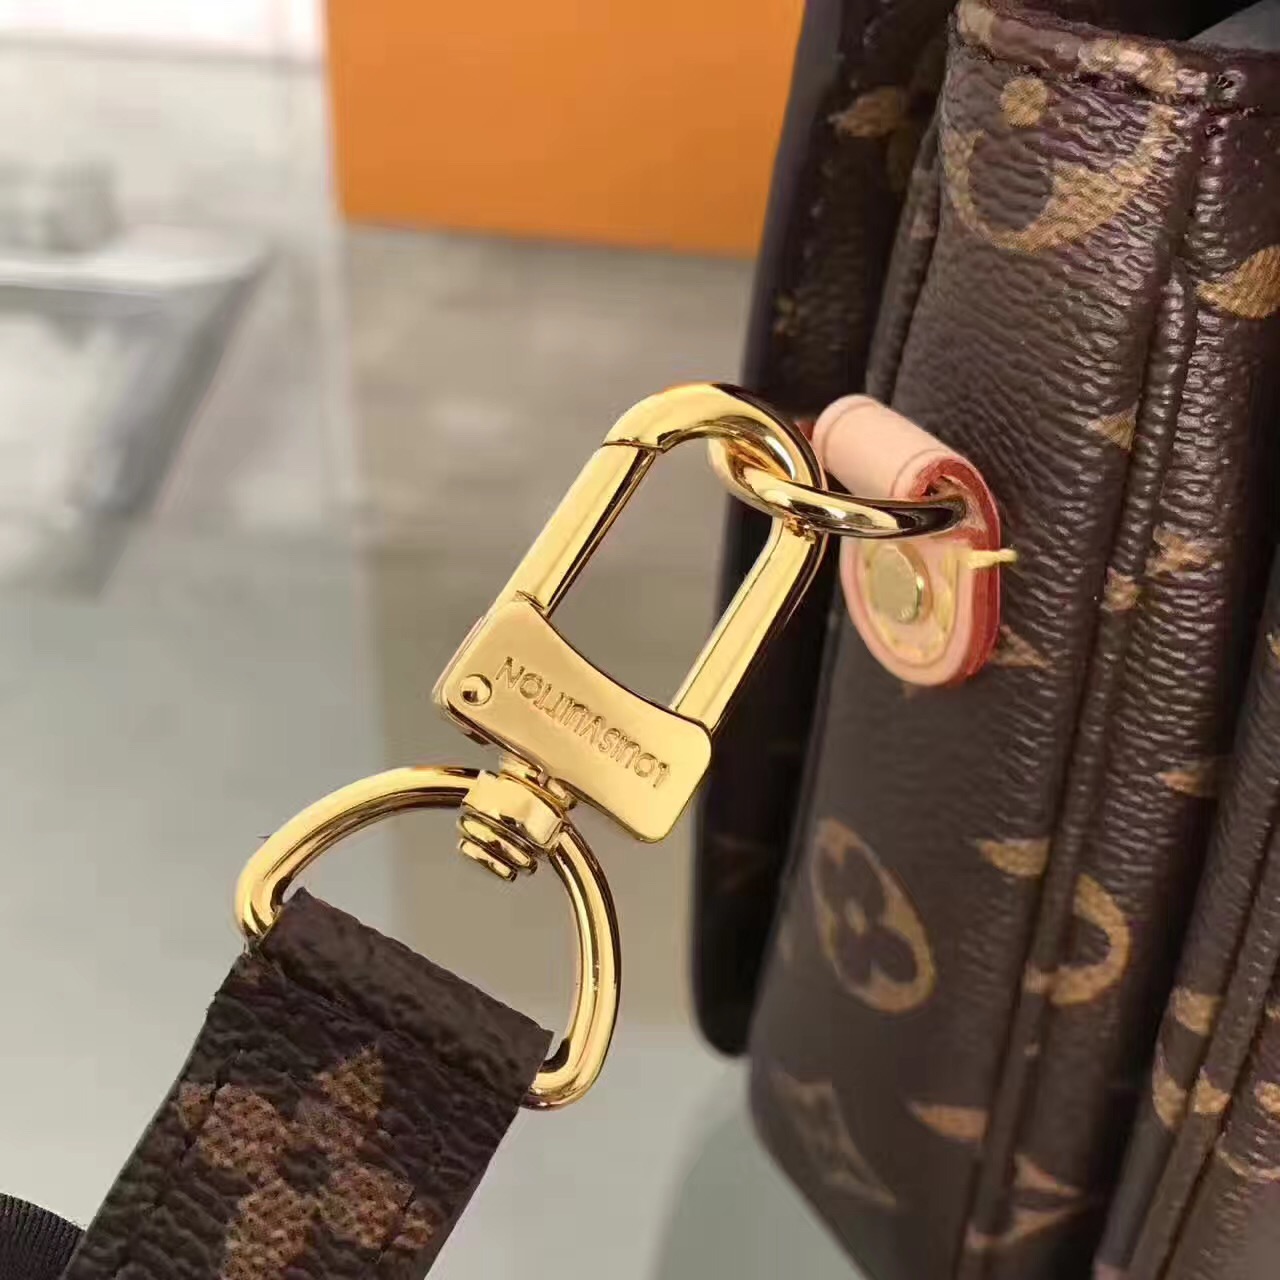 LV Louis Vuitton messenger monogram pochette handbags